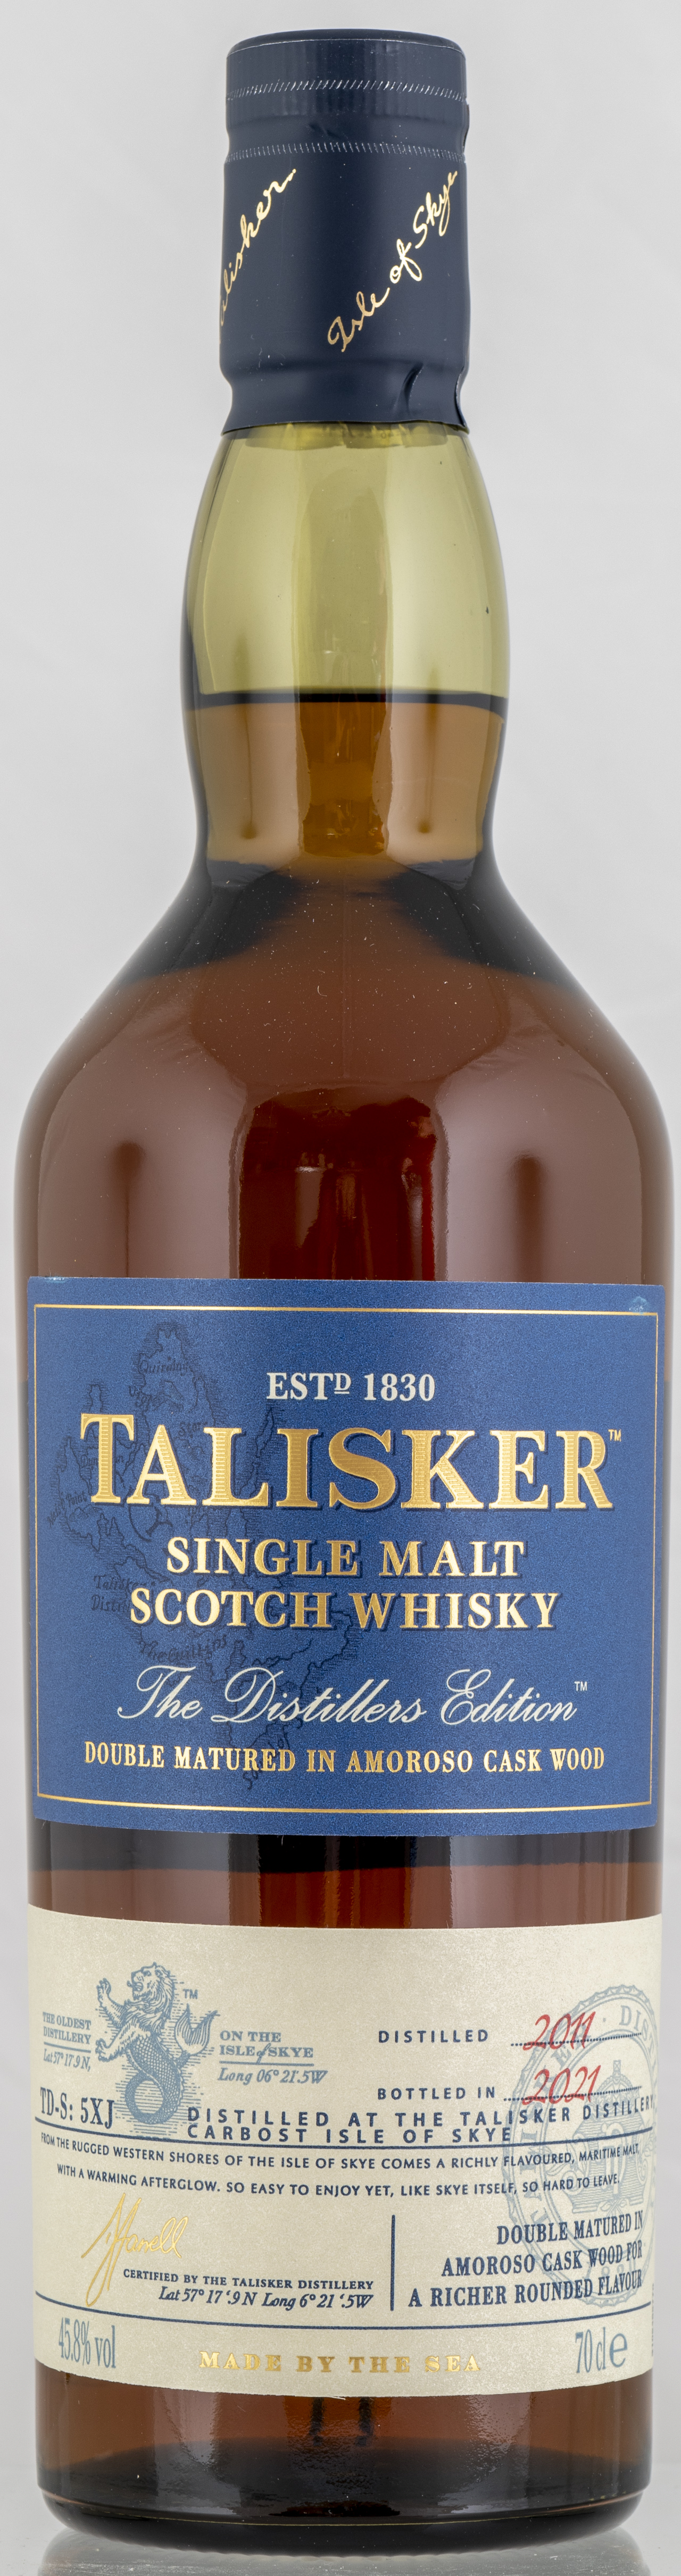 Billede: PHC_7306 - Talisker Distillers Edition TD-S 5XJ - bottle front.jpg